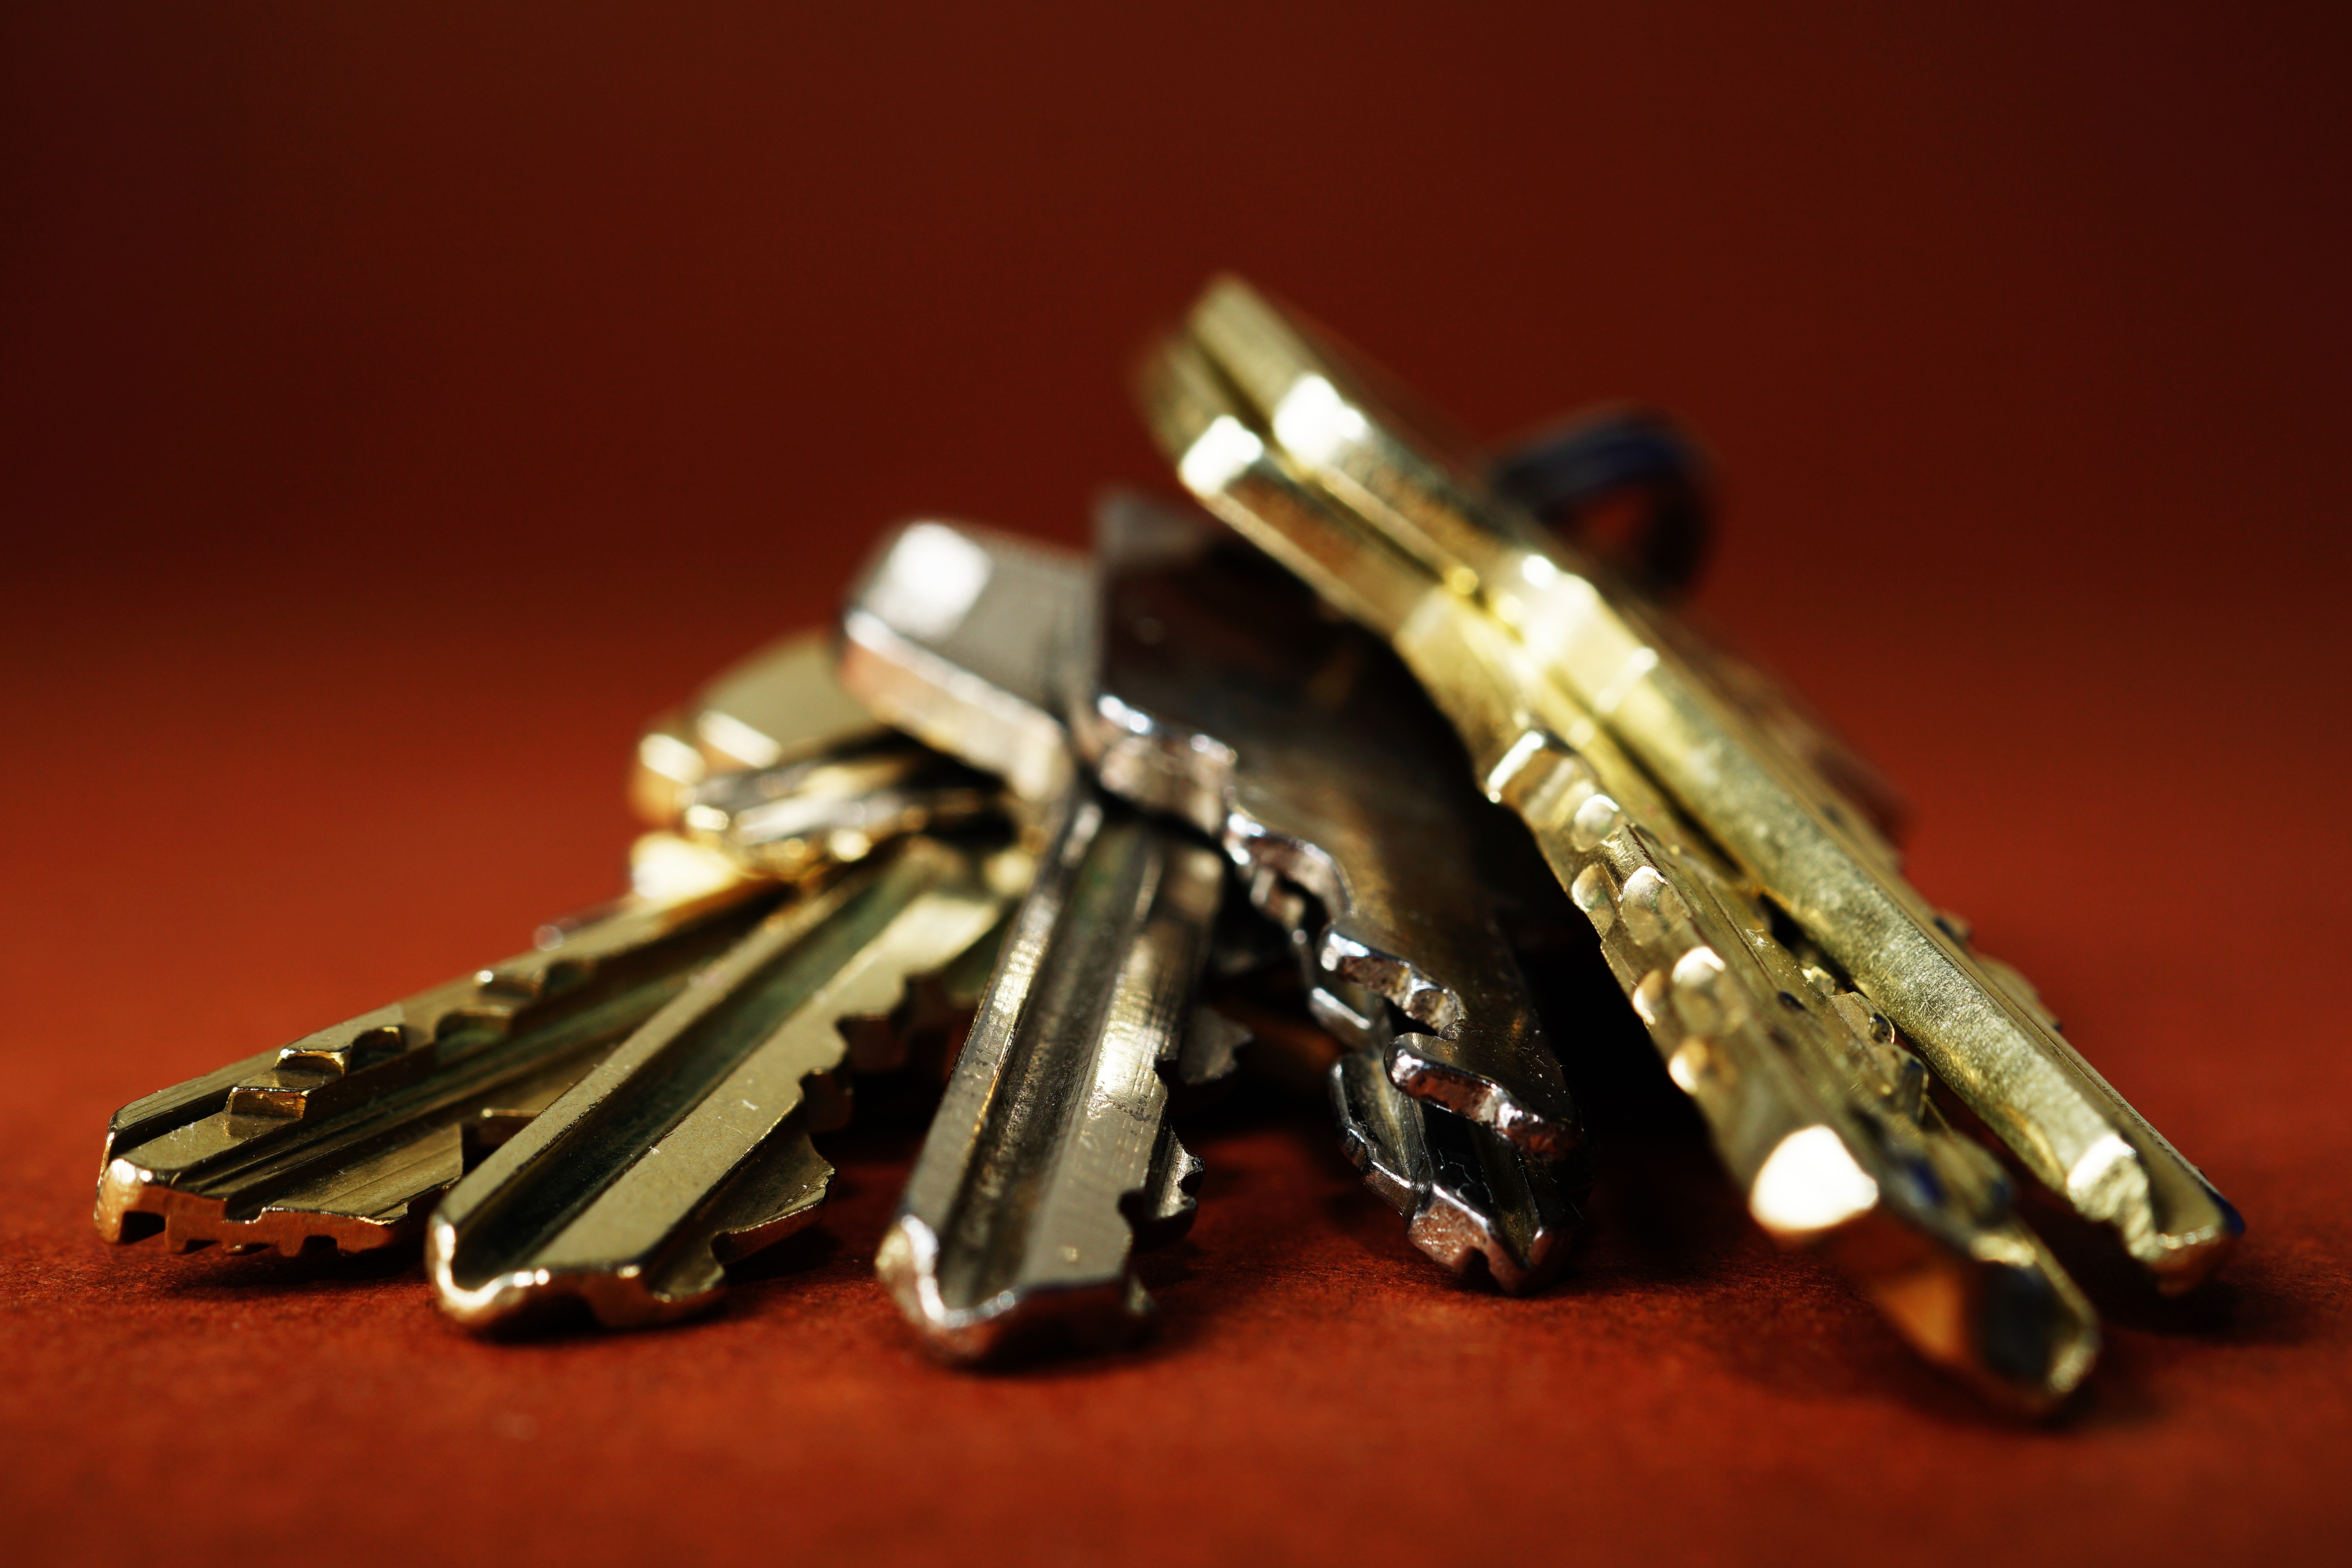 image of a set of keys lying flat